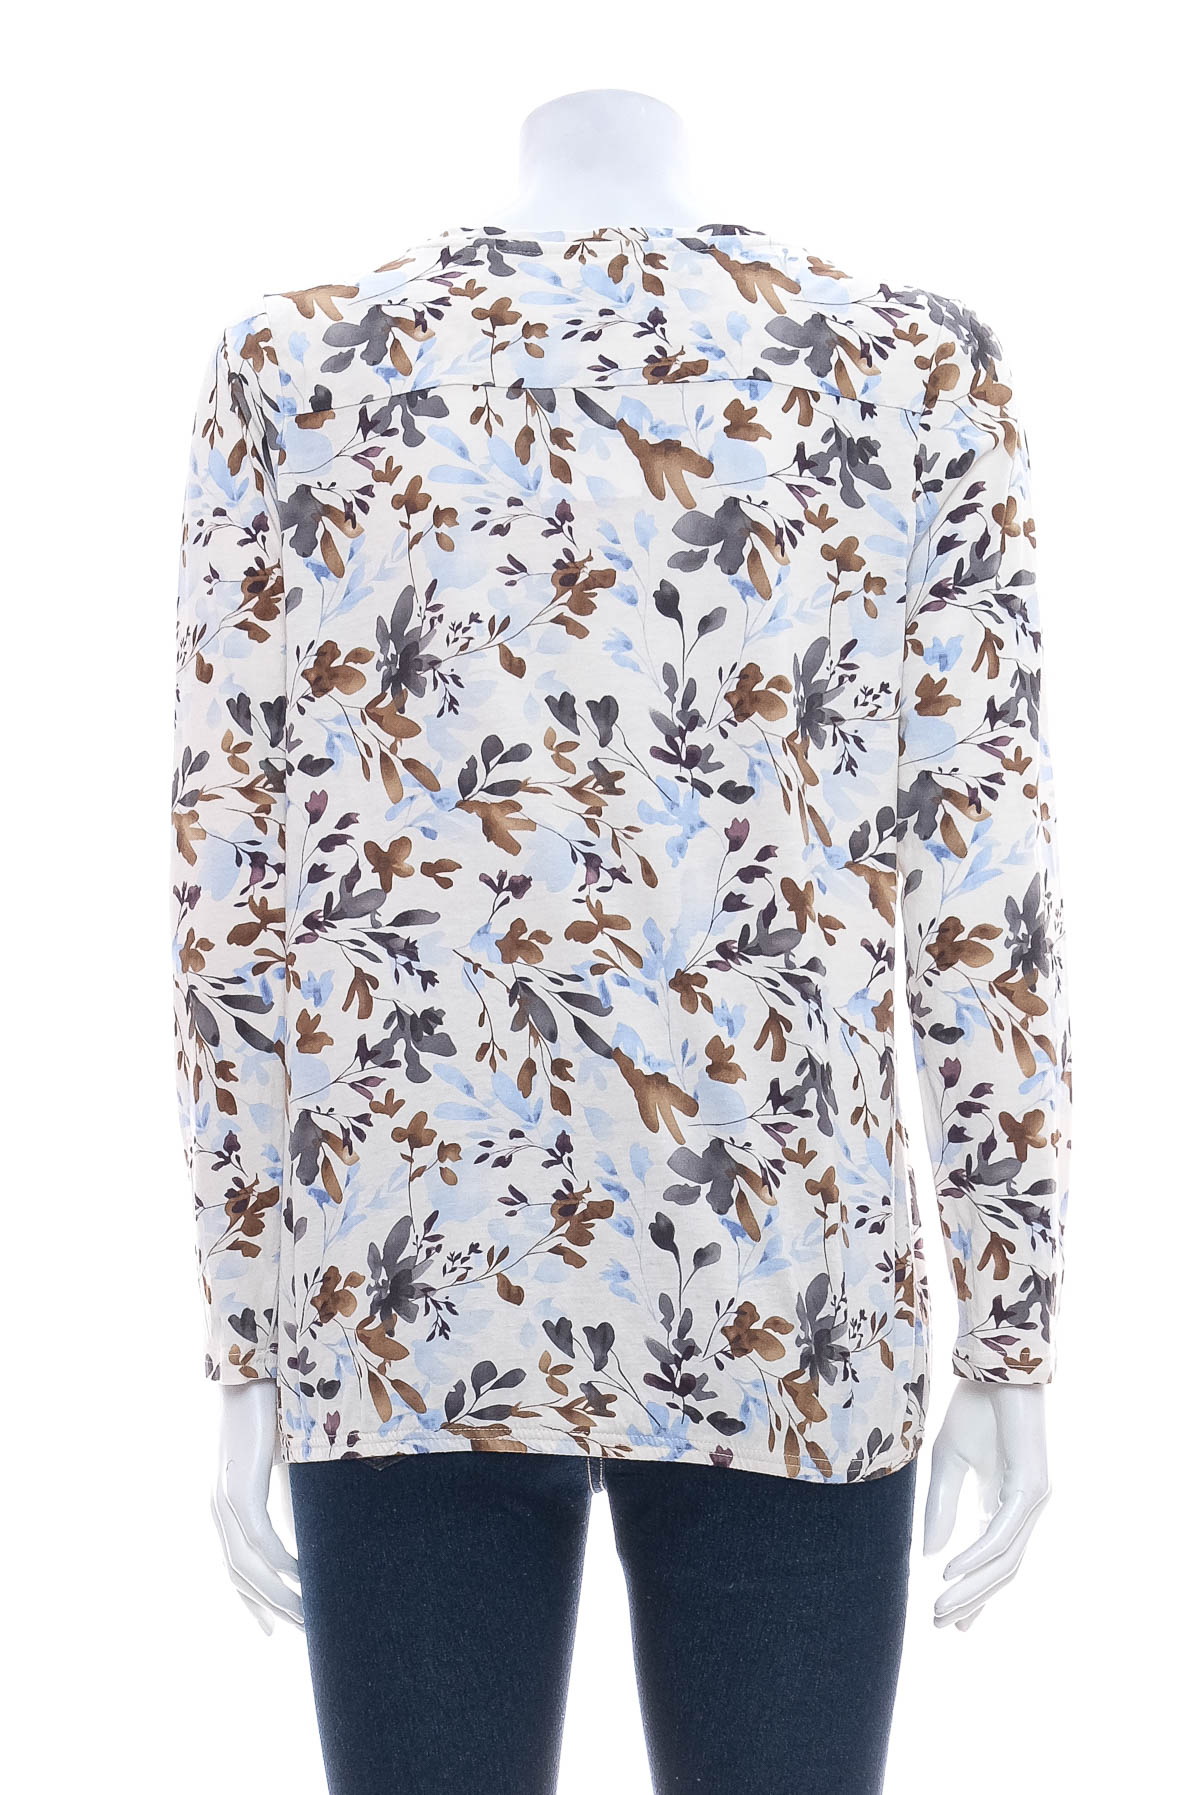 Women's blouse - Soya Concept - 1